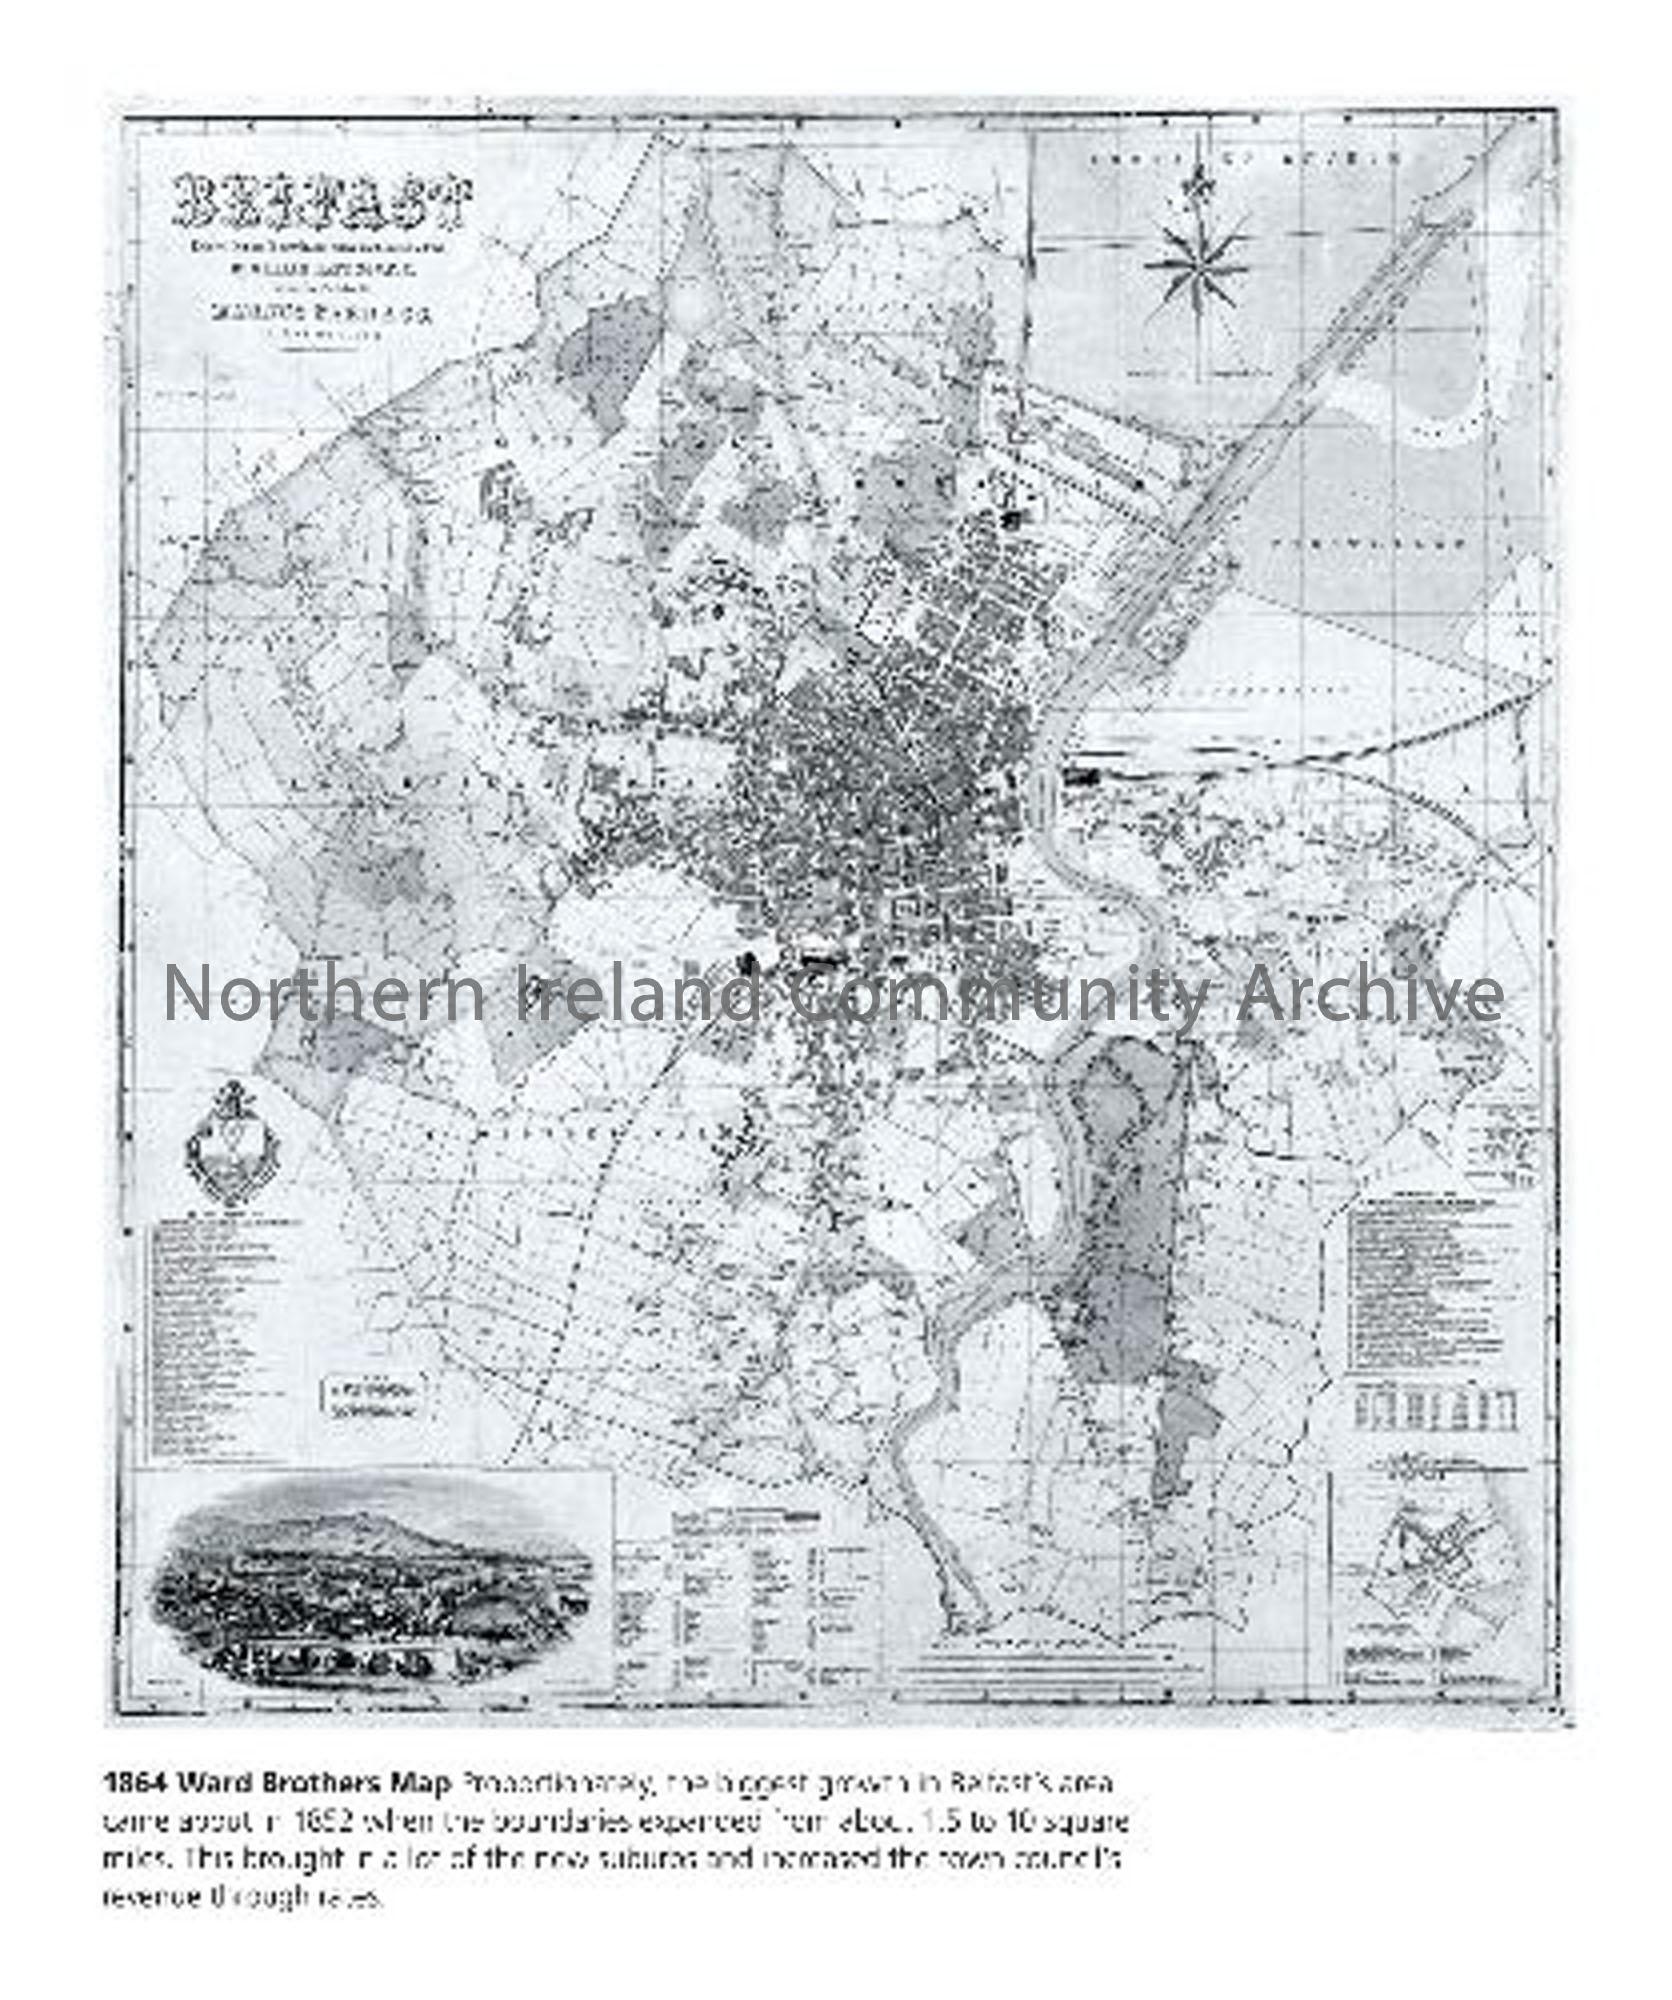 Belfast through Cartography (3299)